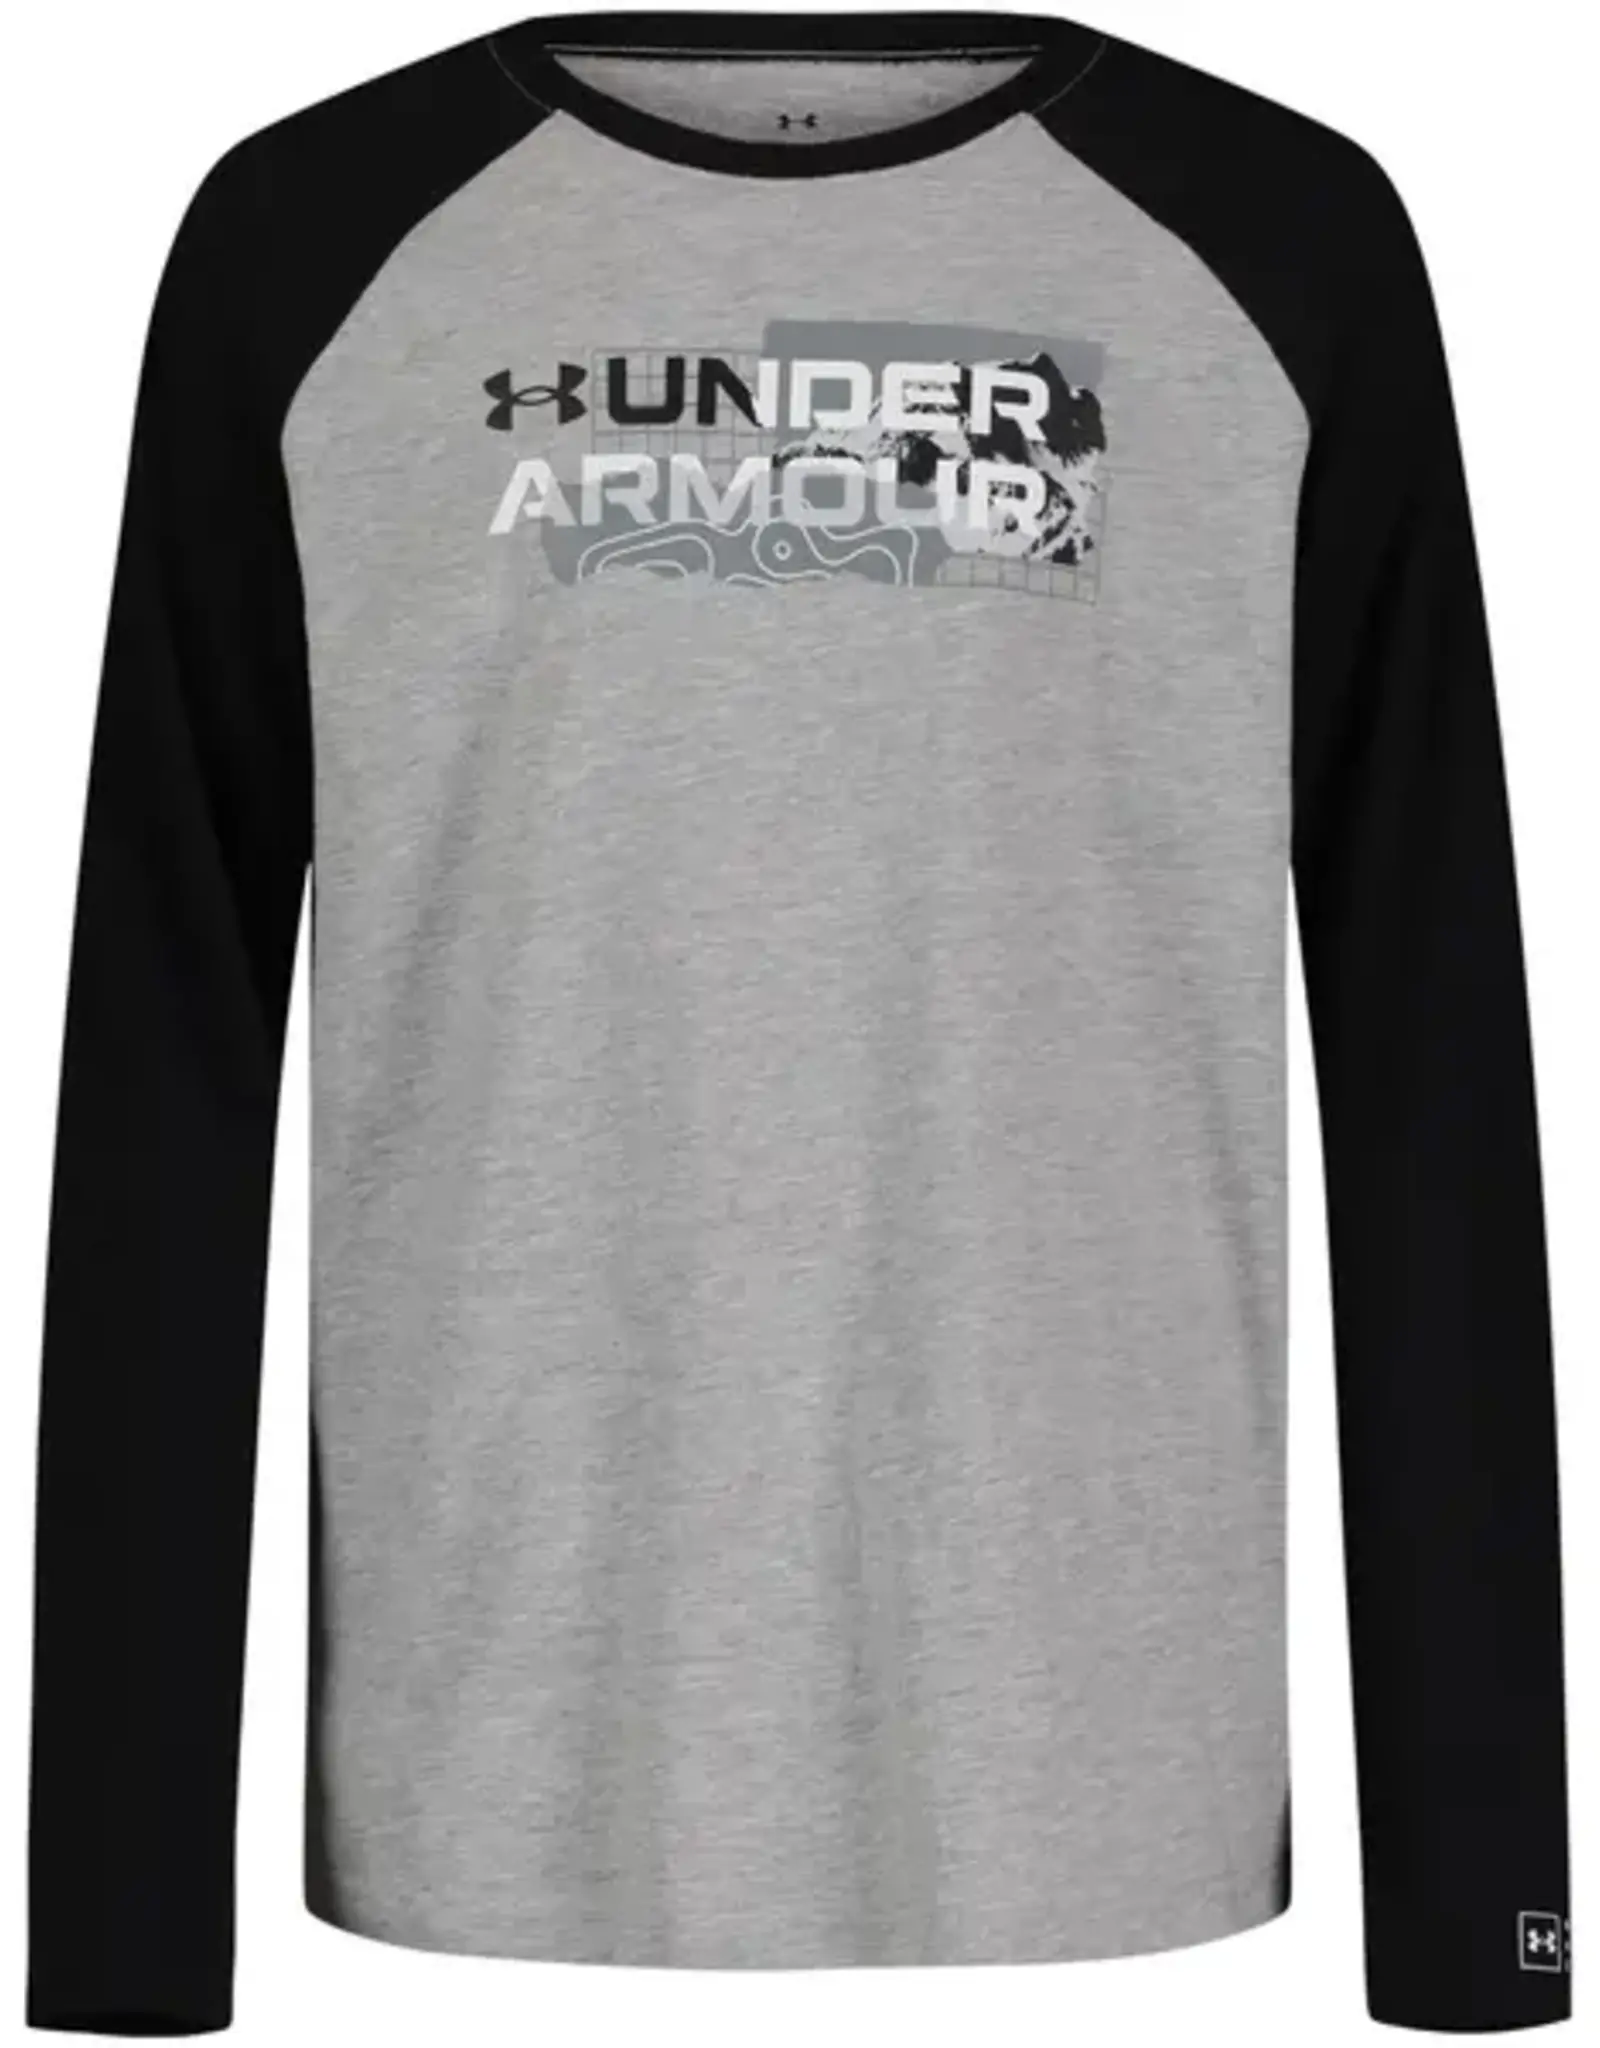 Under Armour FA23 B Rag Shirt